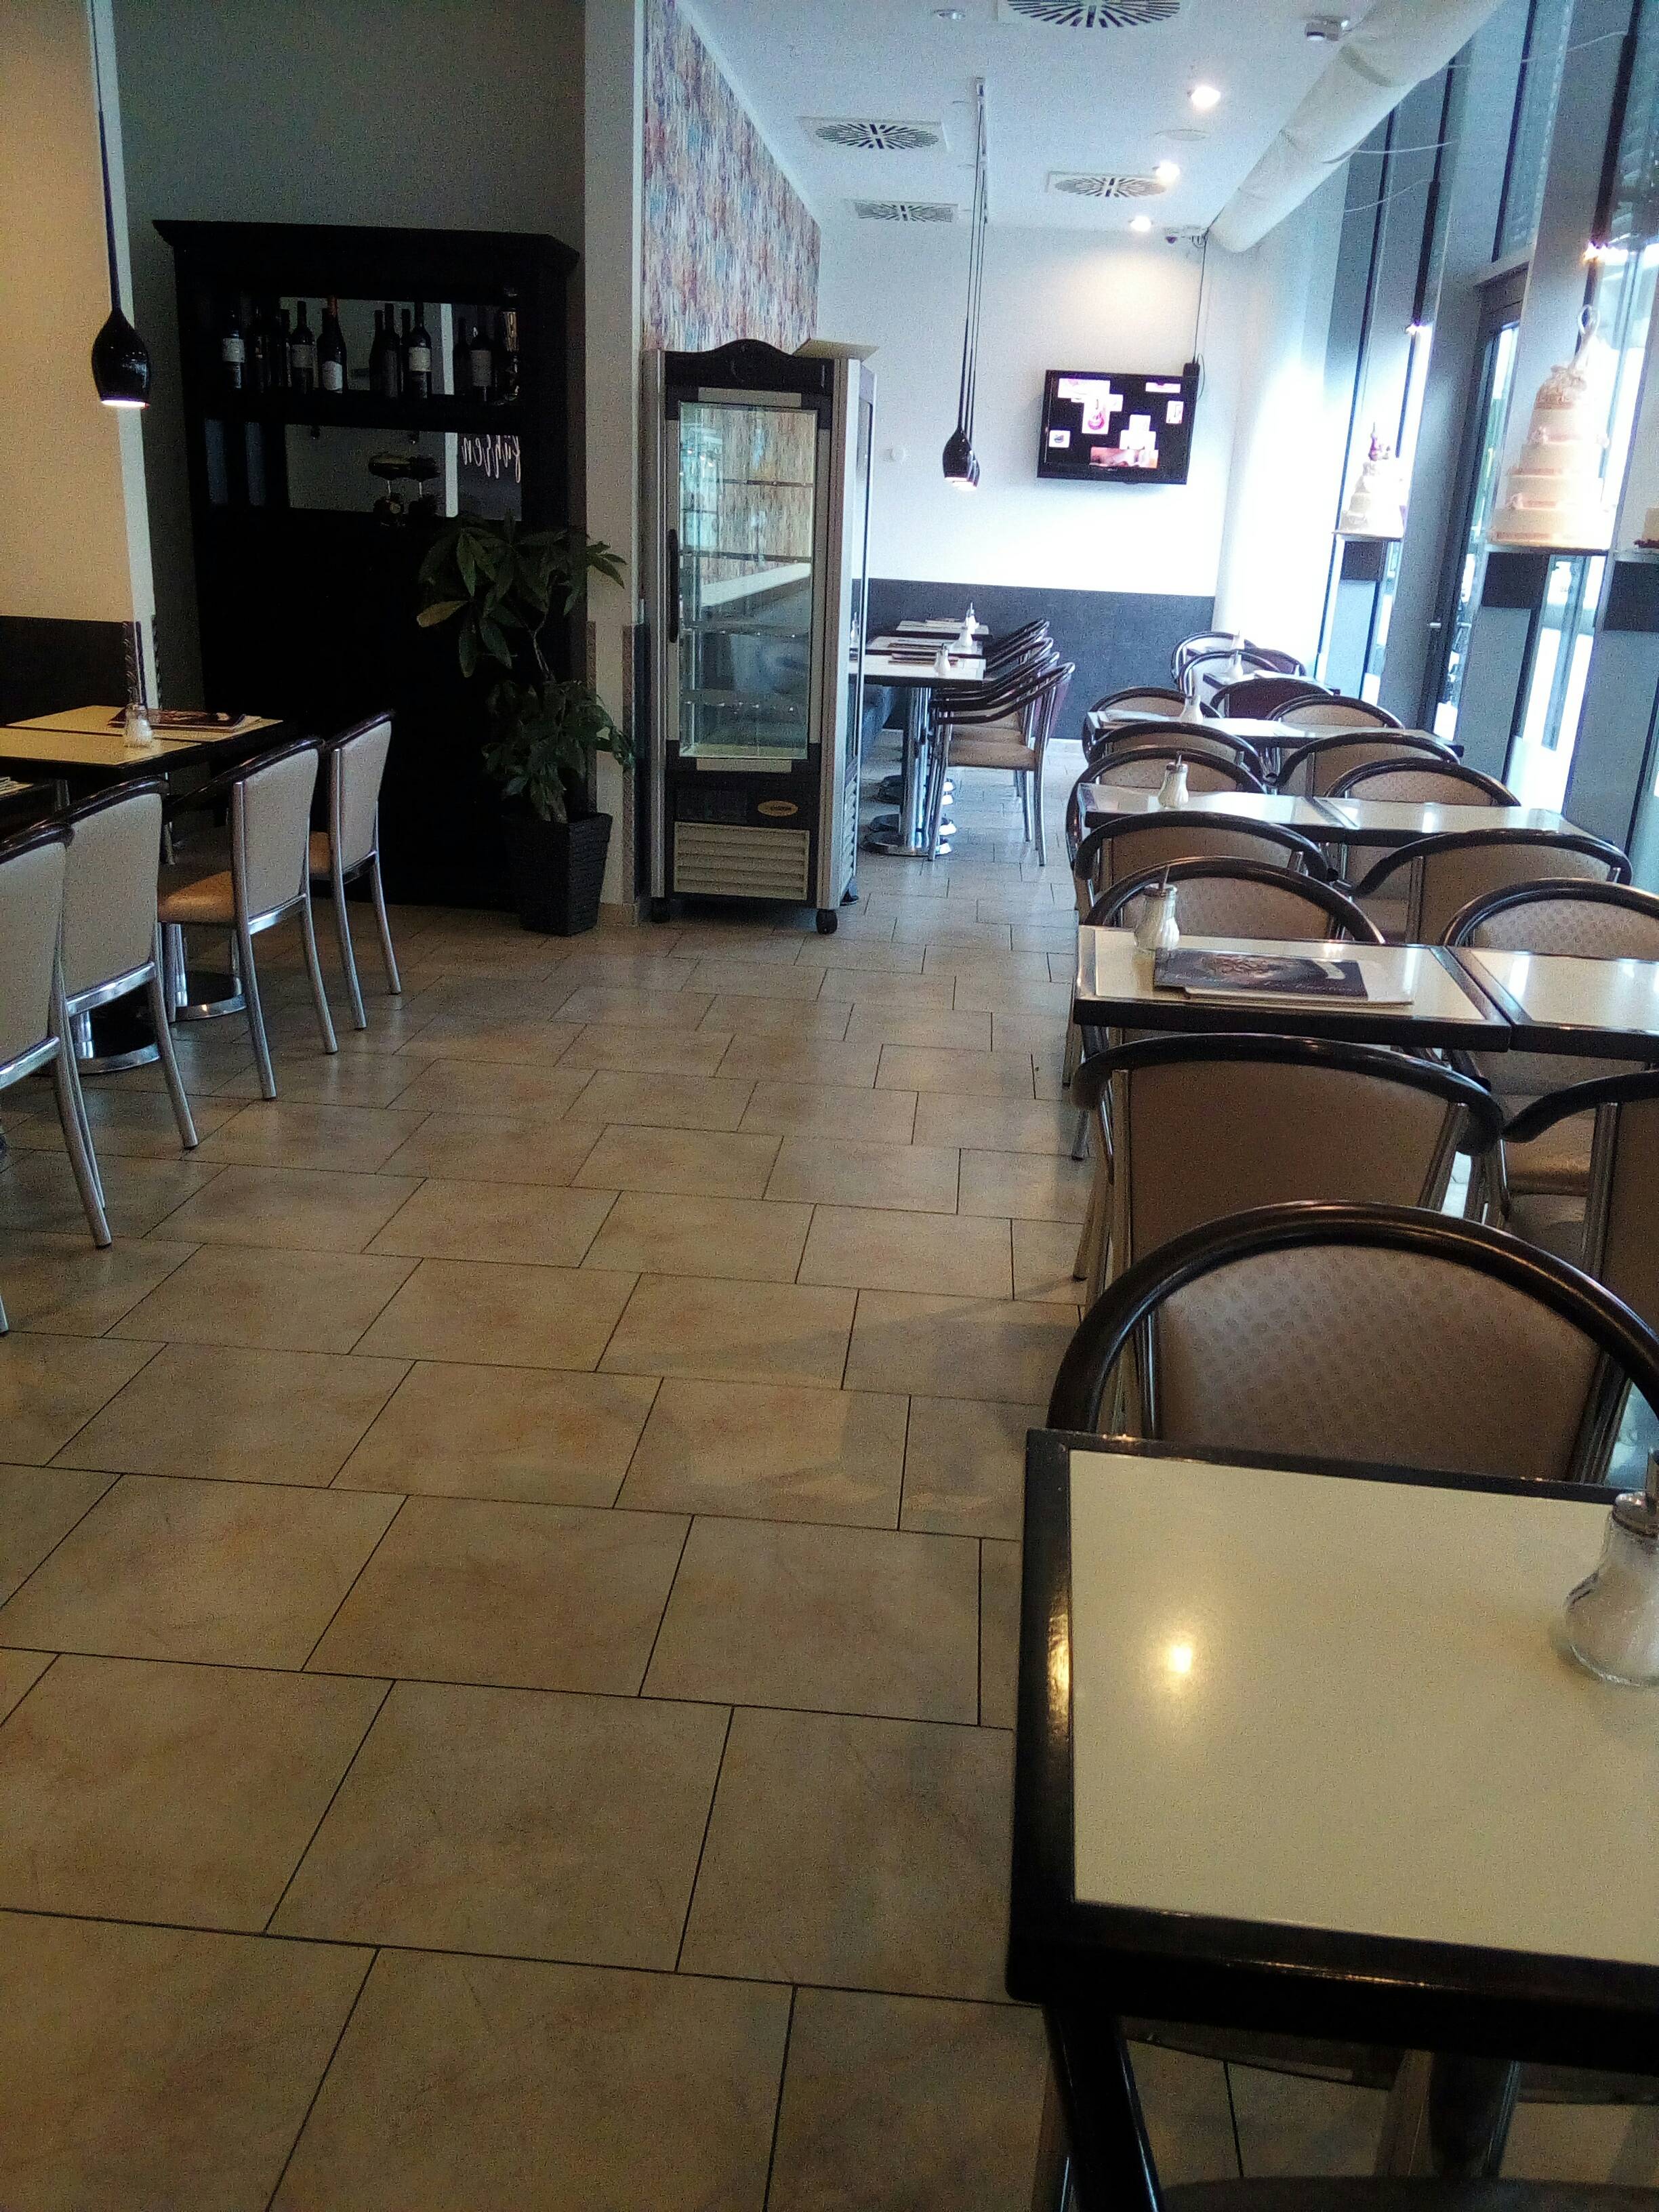 Bild 1 Café Da Rino in Bottrop